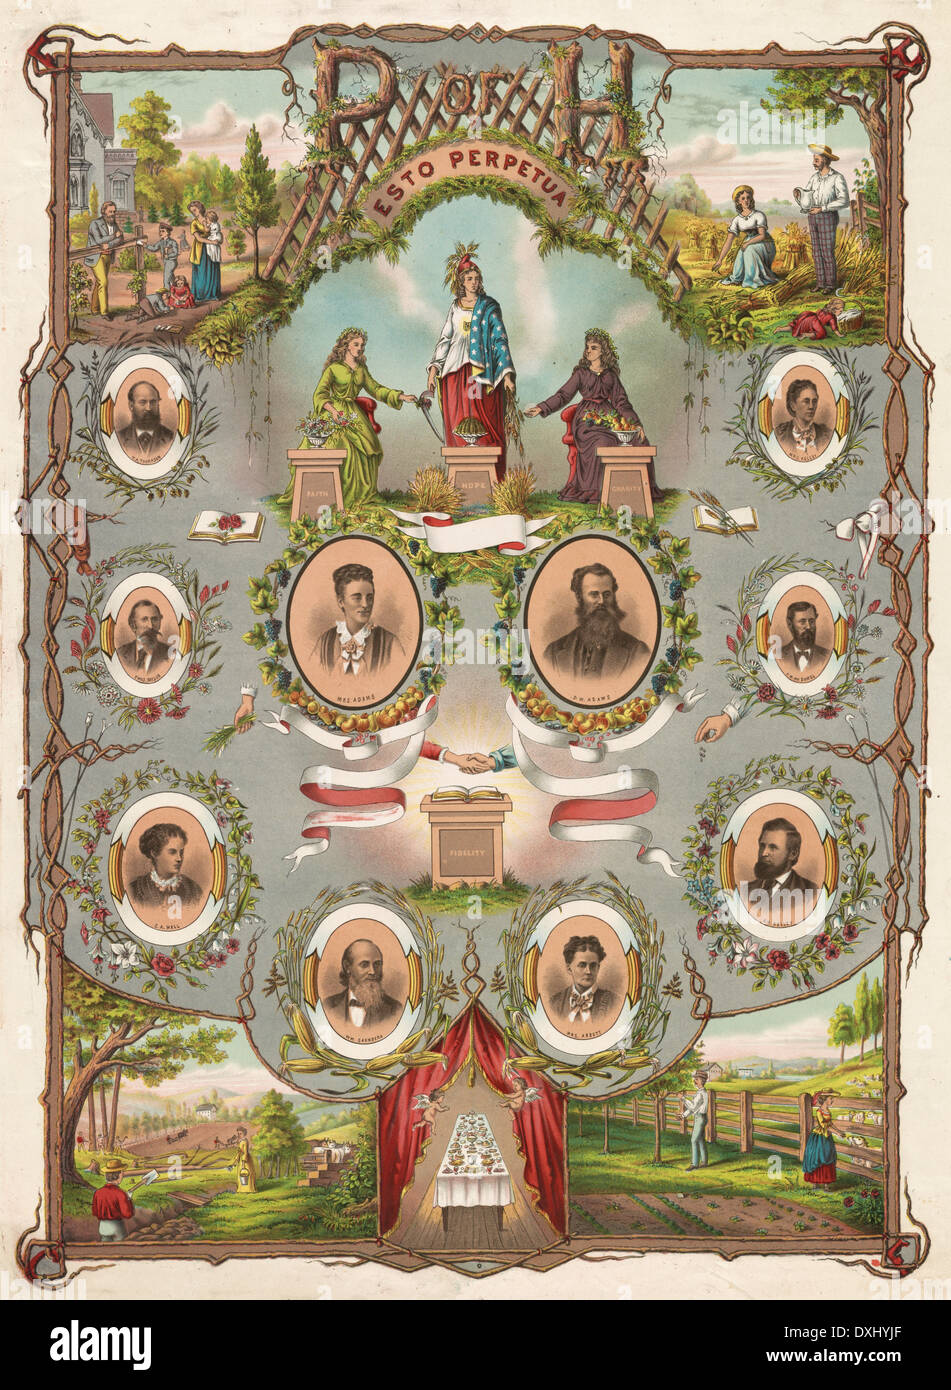 Patrons of Husbandry (P of H) - Esto Perpetua - poster, circa 1875 Stock Photo